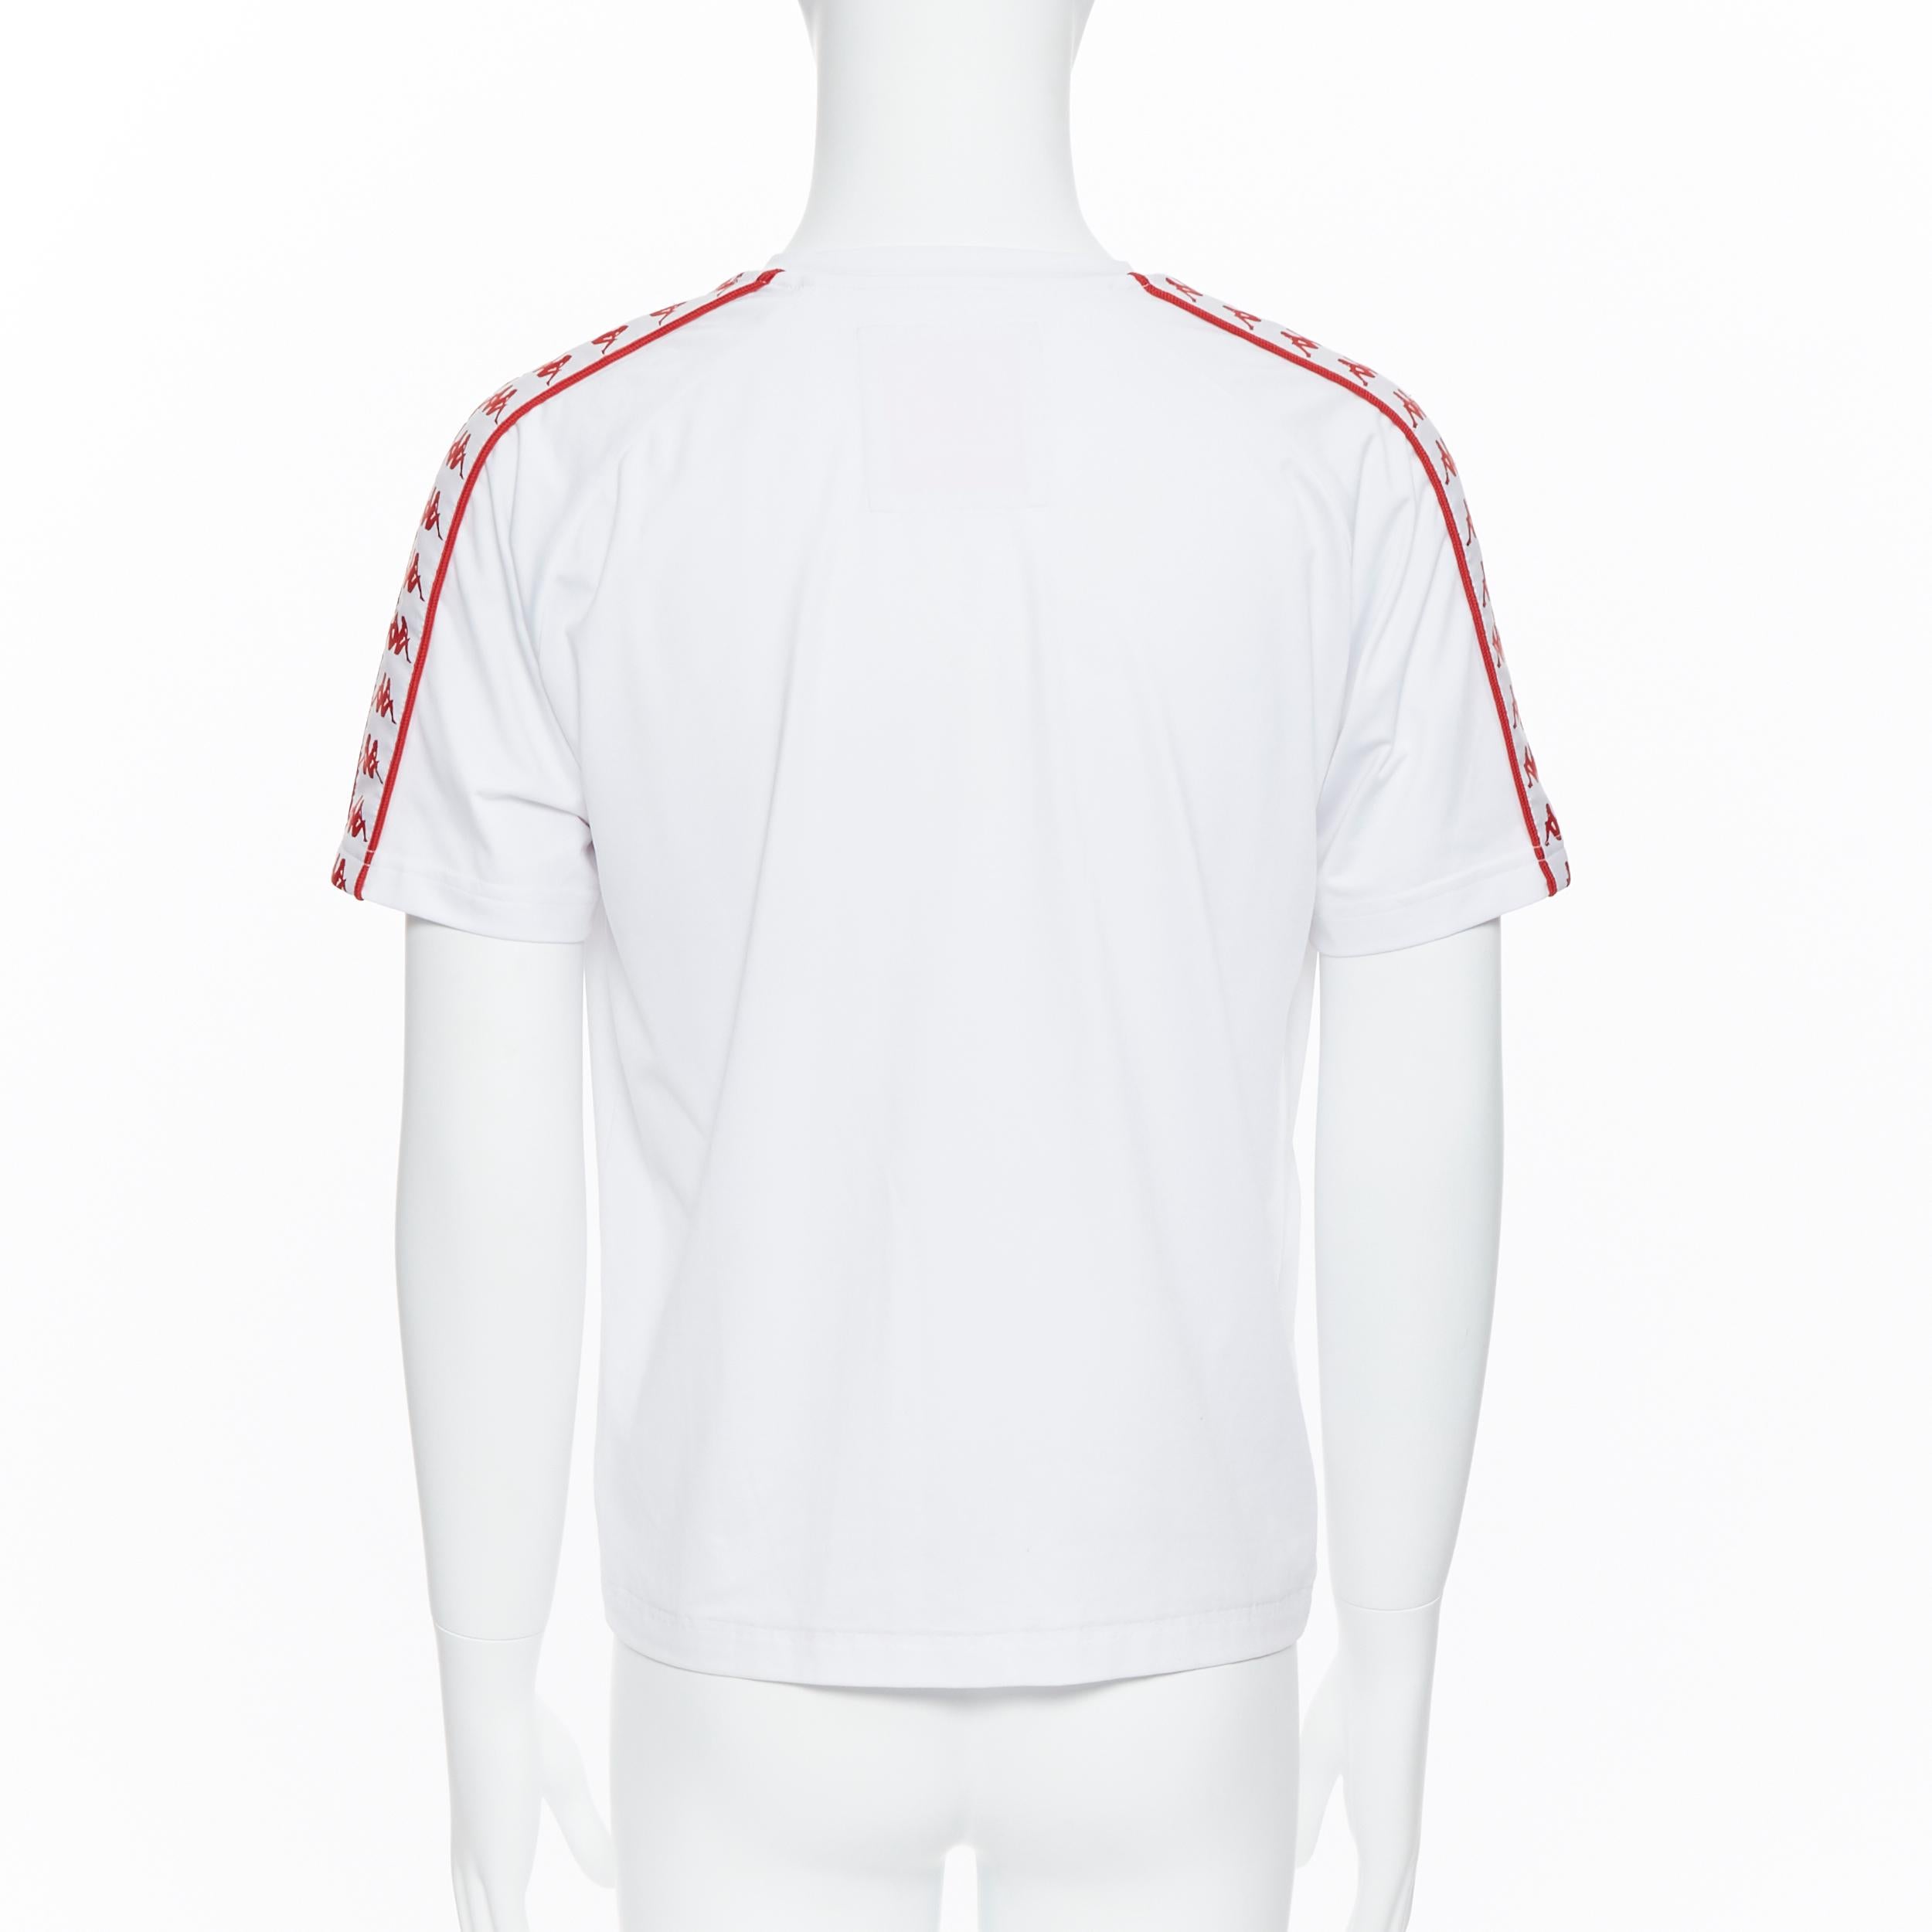 Gray GOSHA RUBCHINSKIY KAPPA white red logo strip cotton football short sleeve top M